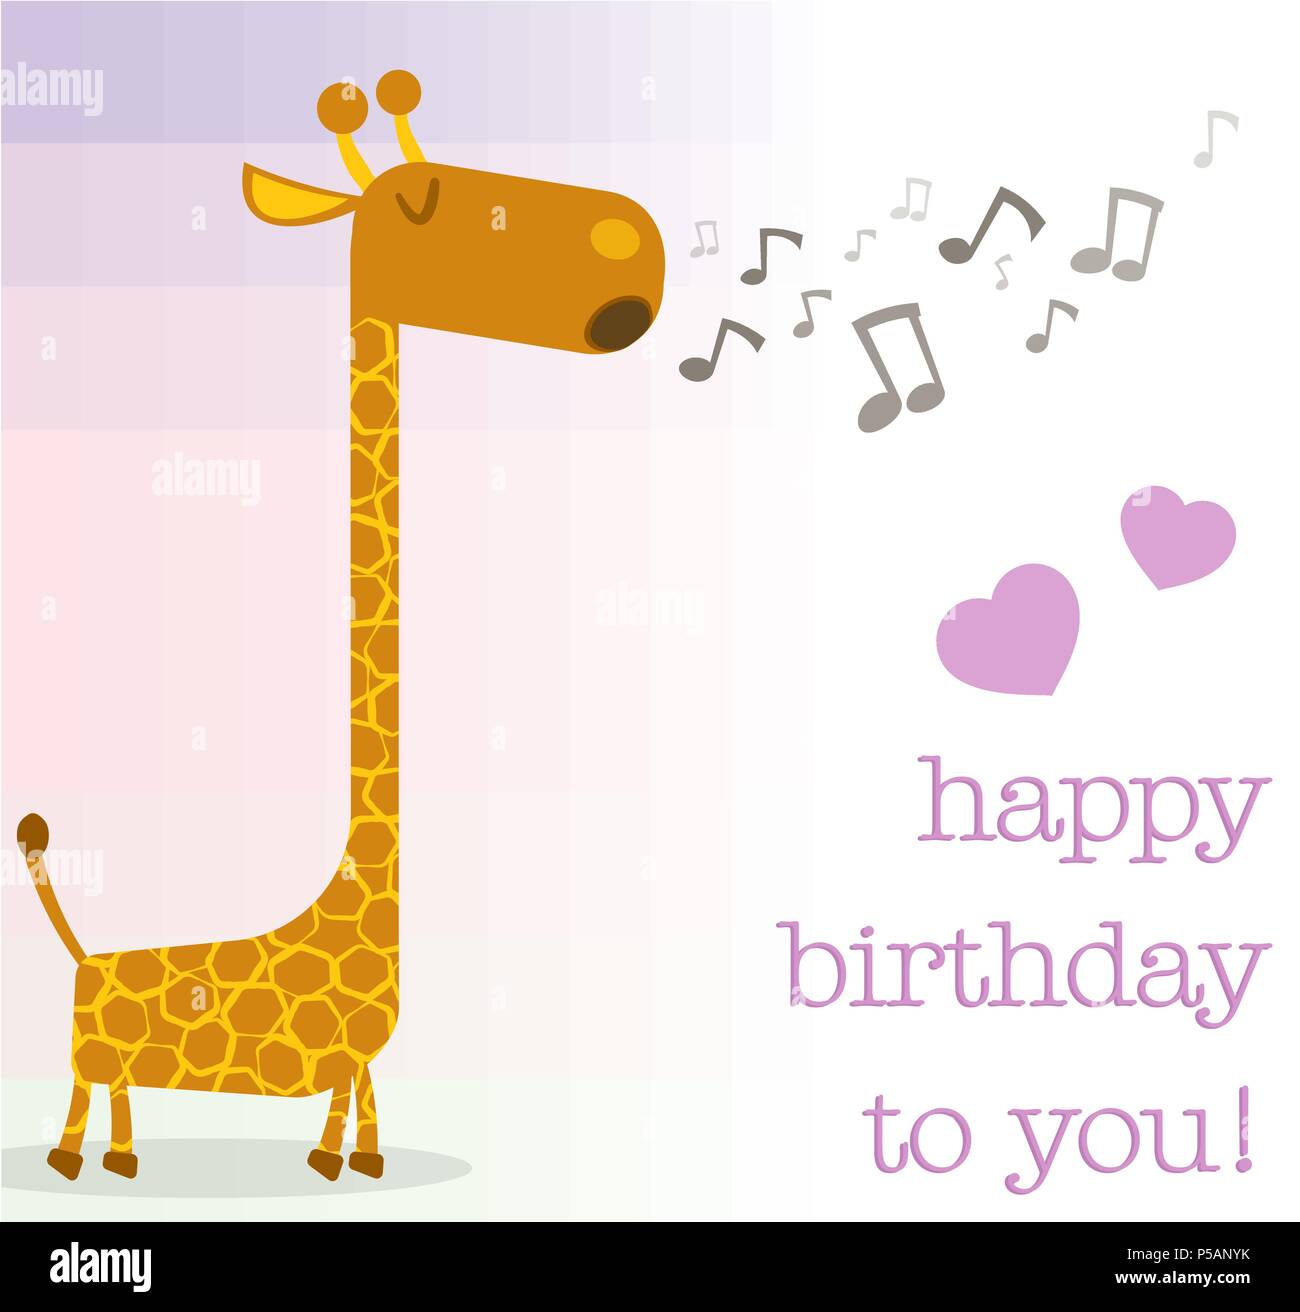 happy birthday greeting card with singing giraffe Stock Vector